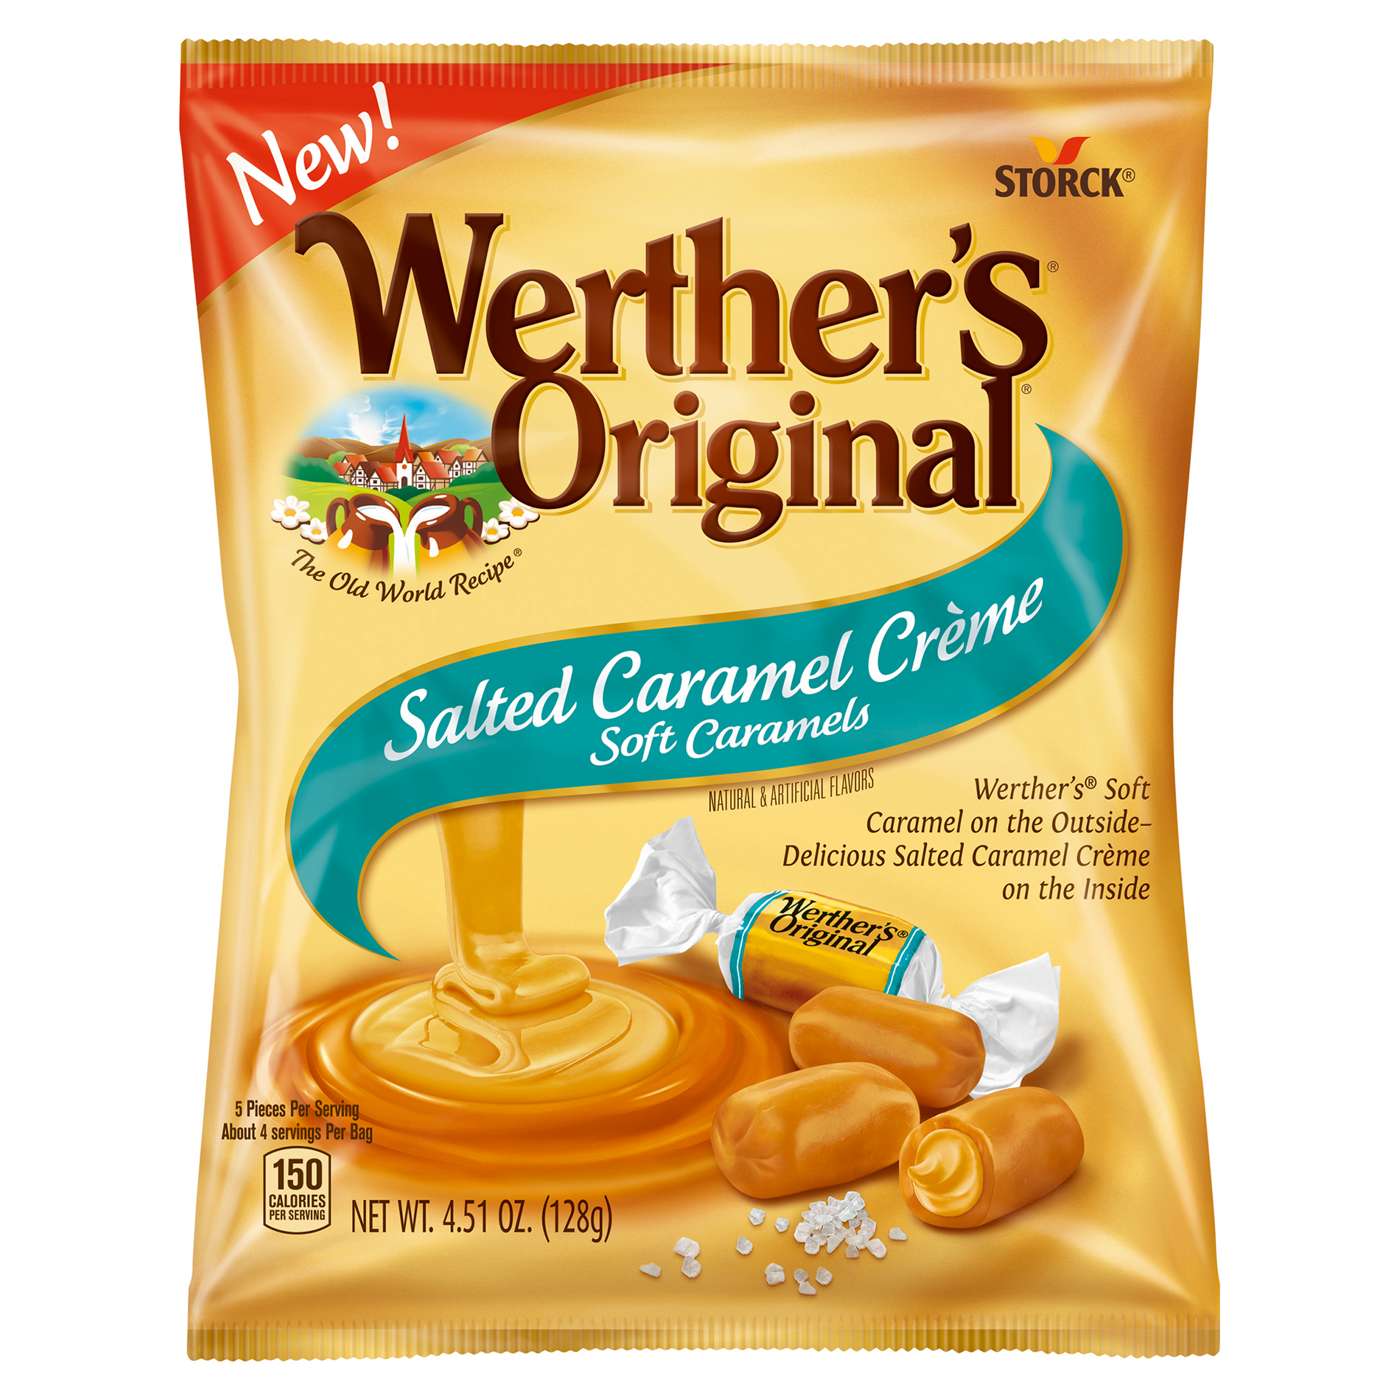 Werther's Original Salted Caramel Creme Soft Caramels; image 1 of 2